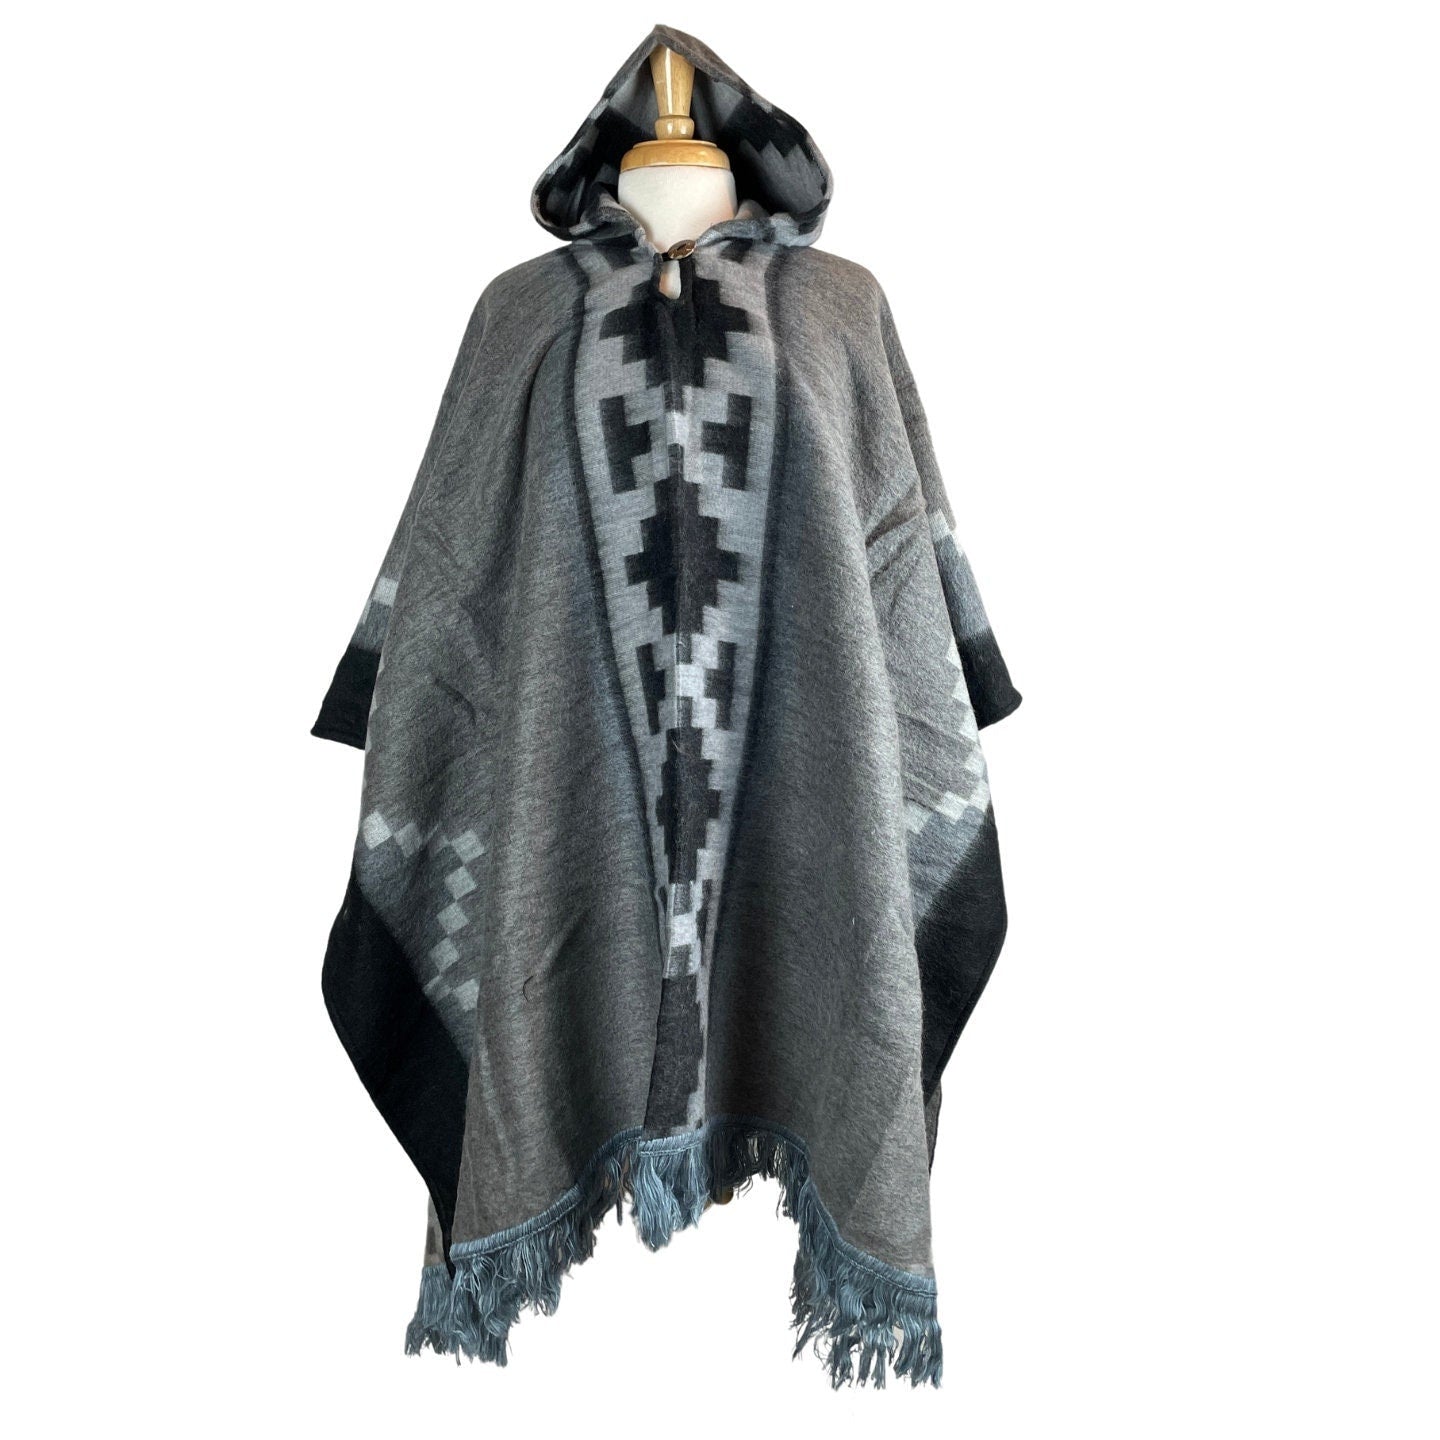 Warm Hooded Poncho Women | Black Shades of Gray